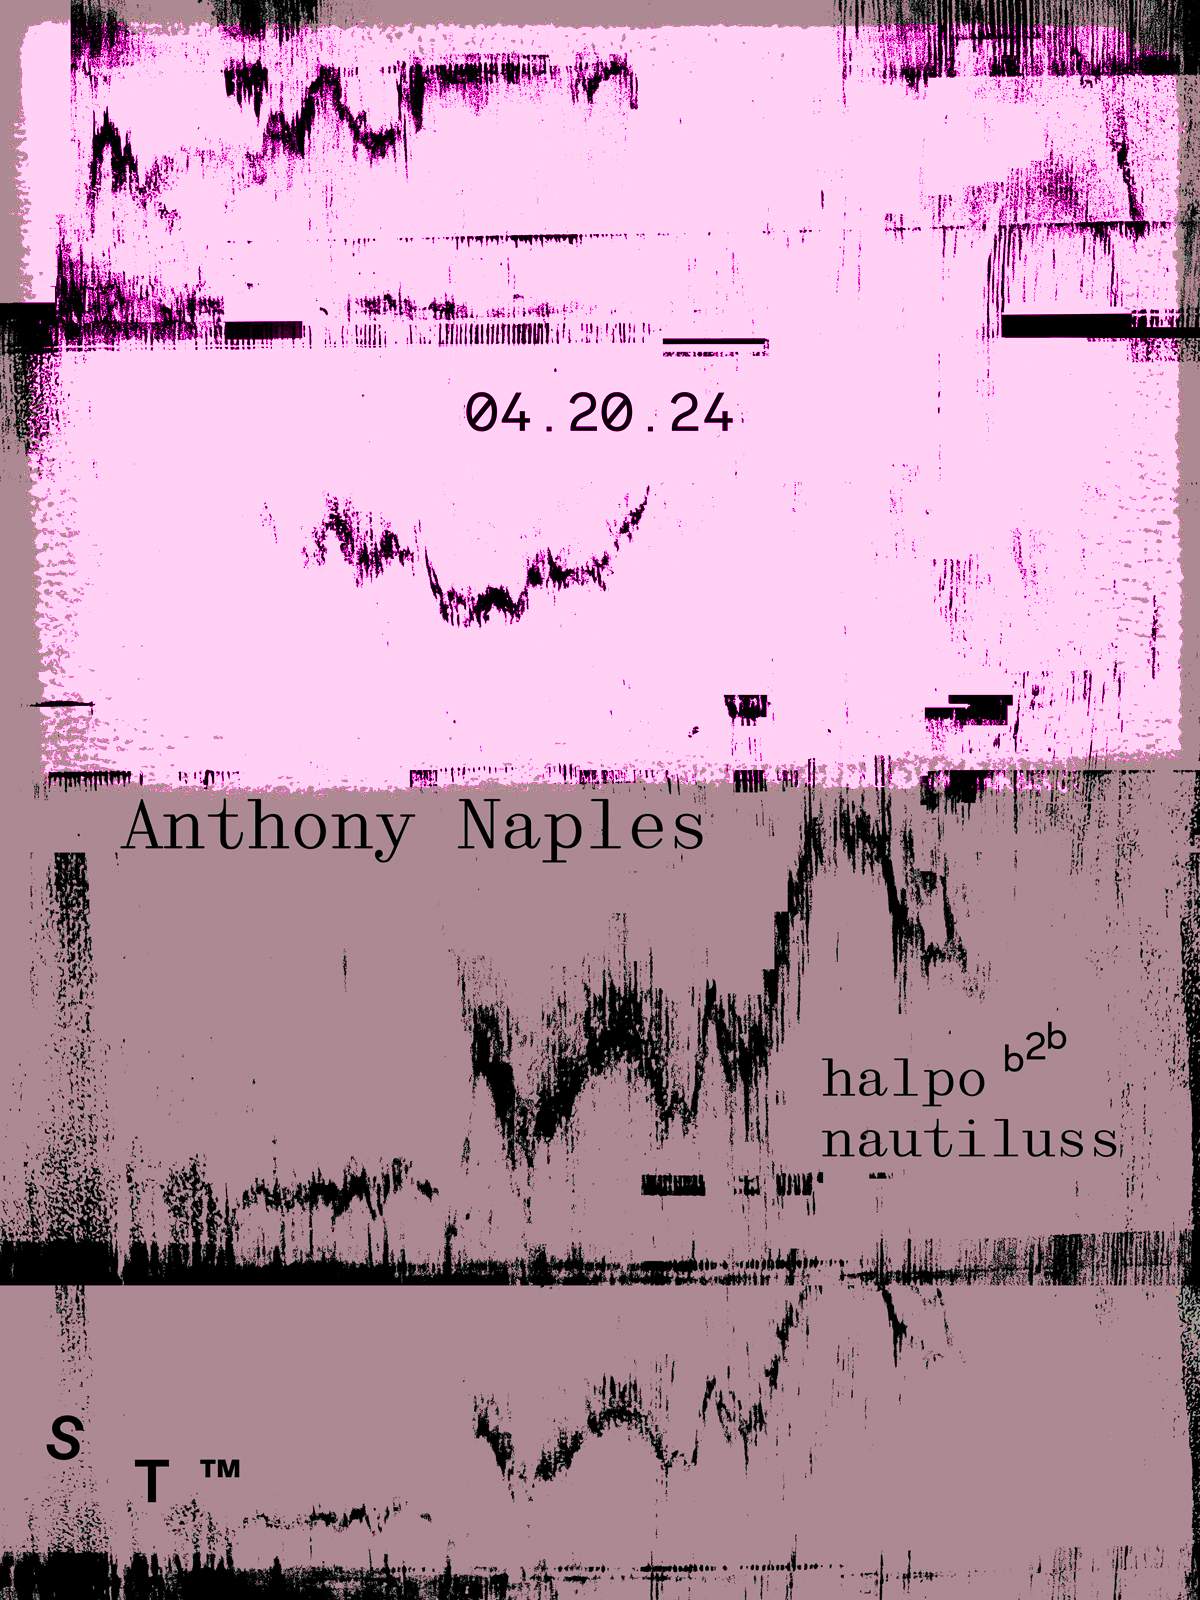 116: Anthony Naples and halpo b2b Nautiluss - Página frontal